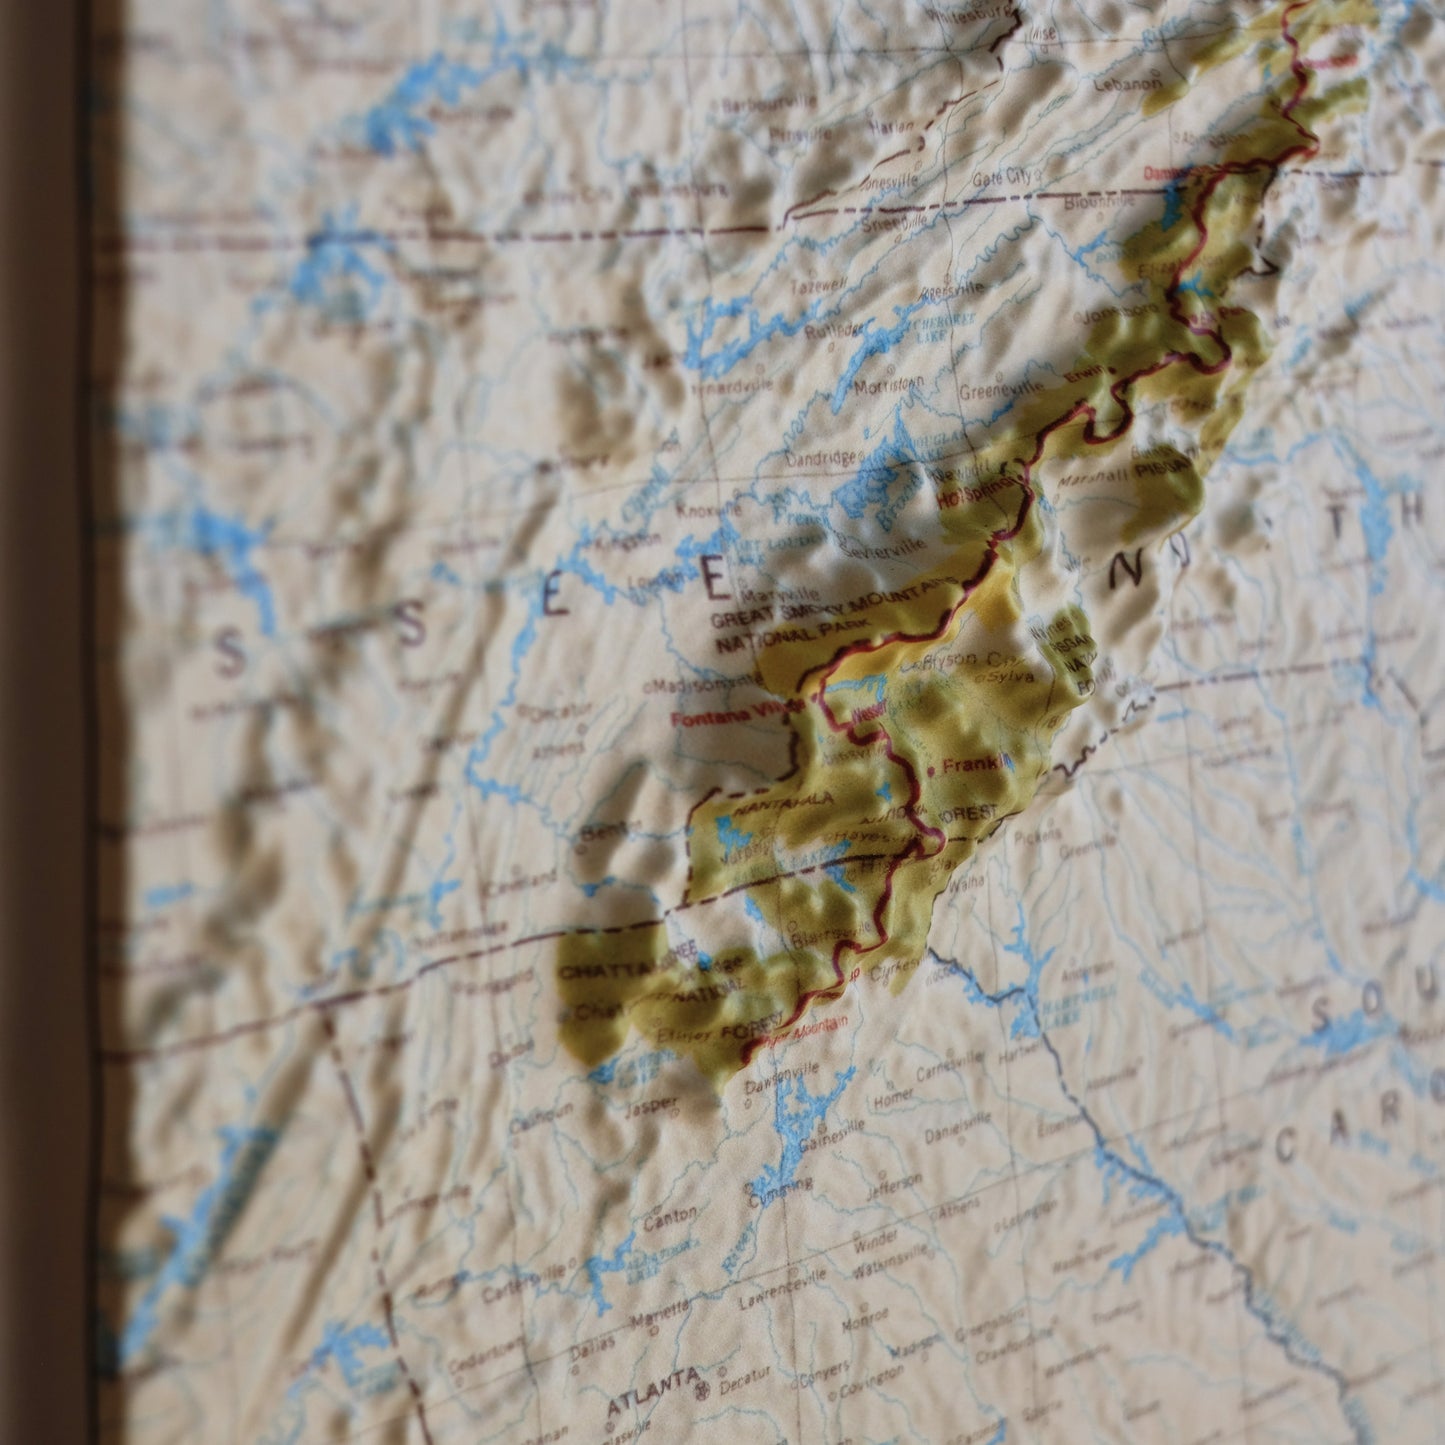 Appalachian Trail 1981 3D Raised Relief Map